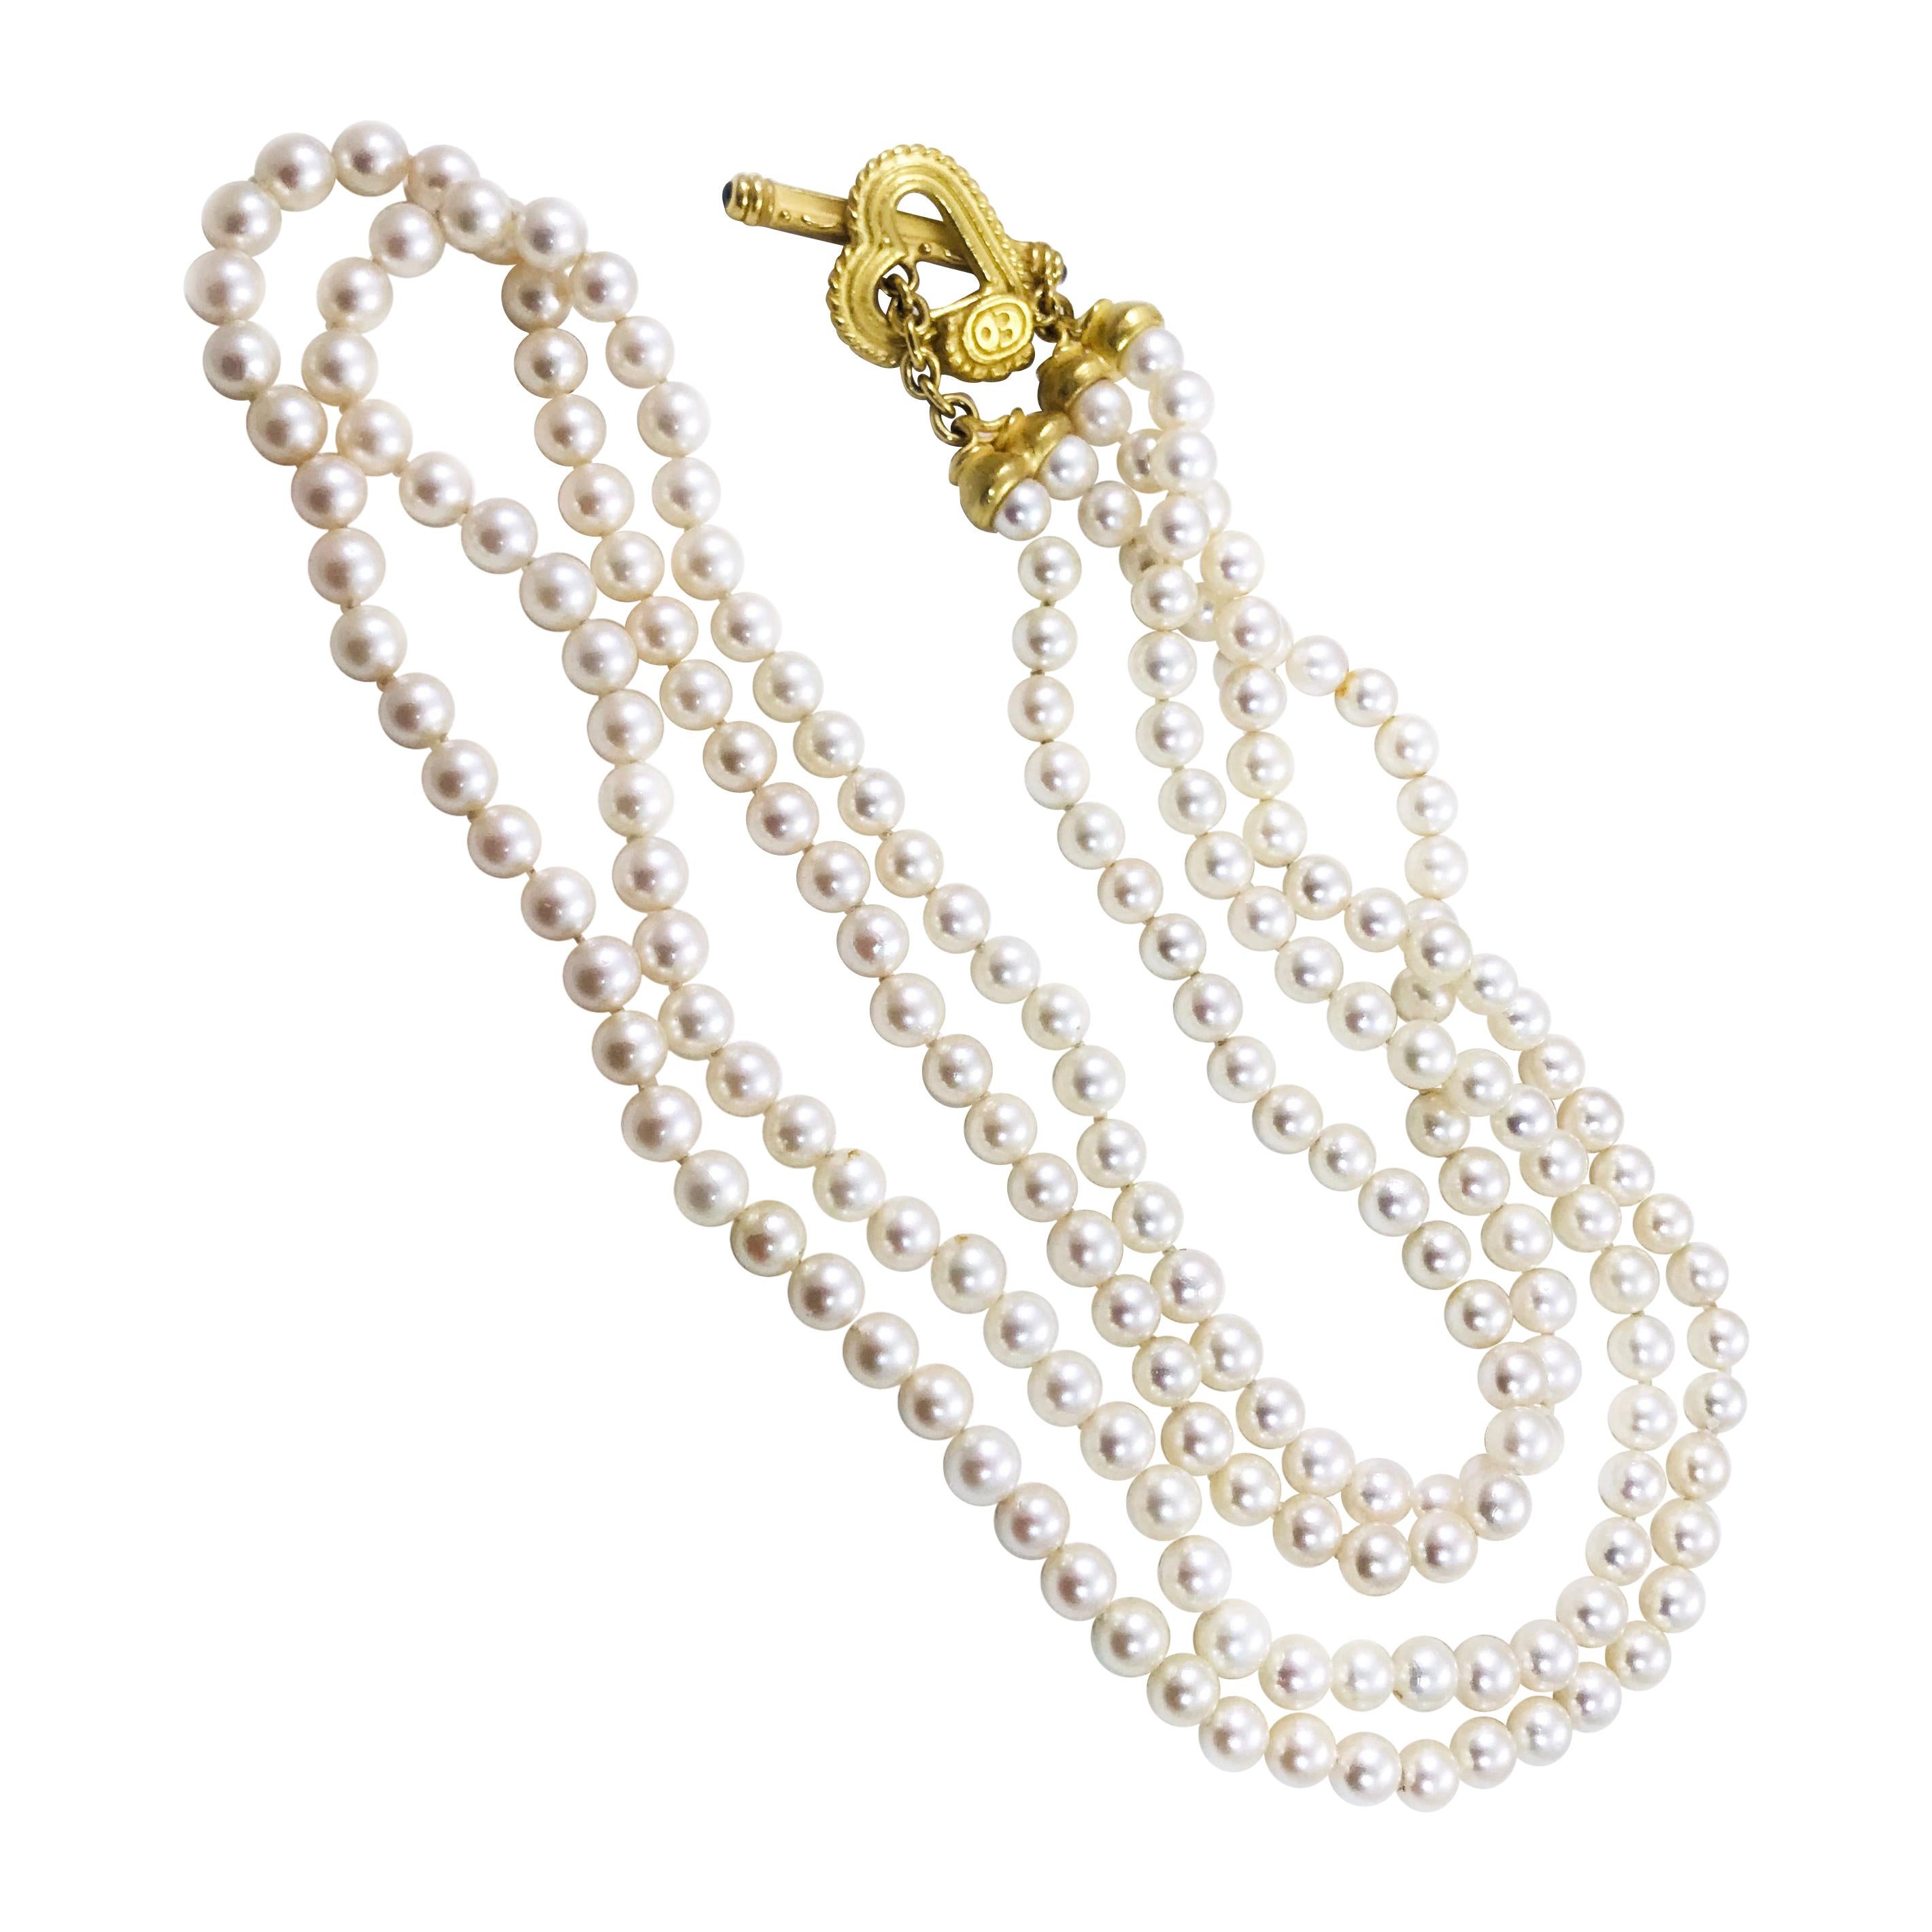 Denise Roberge 22 Karat Japanese Pearl Necklace